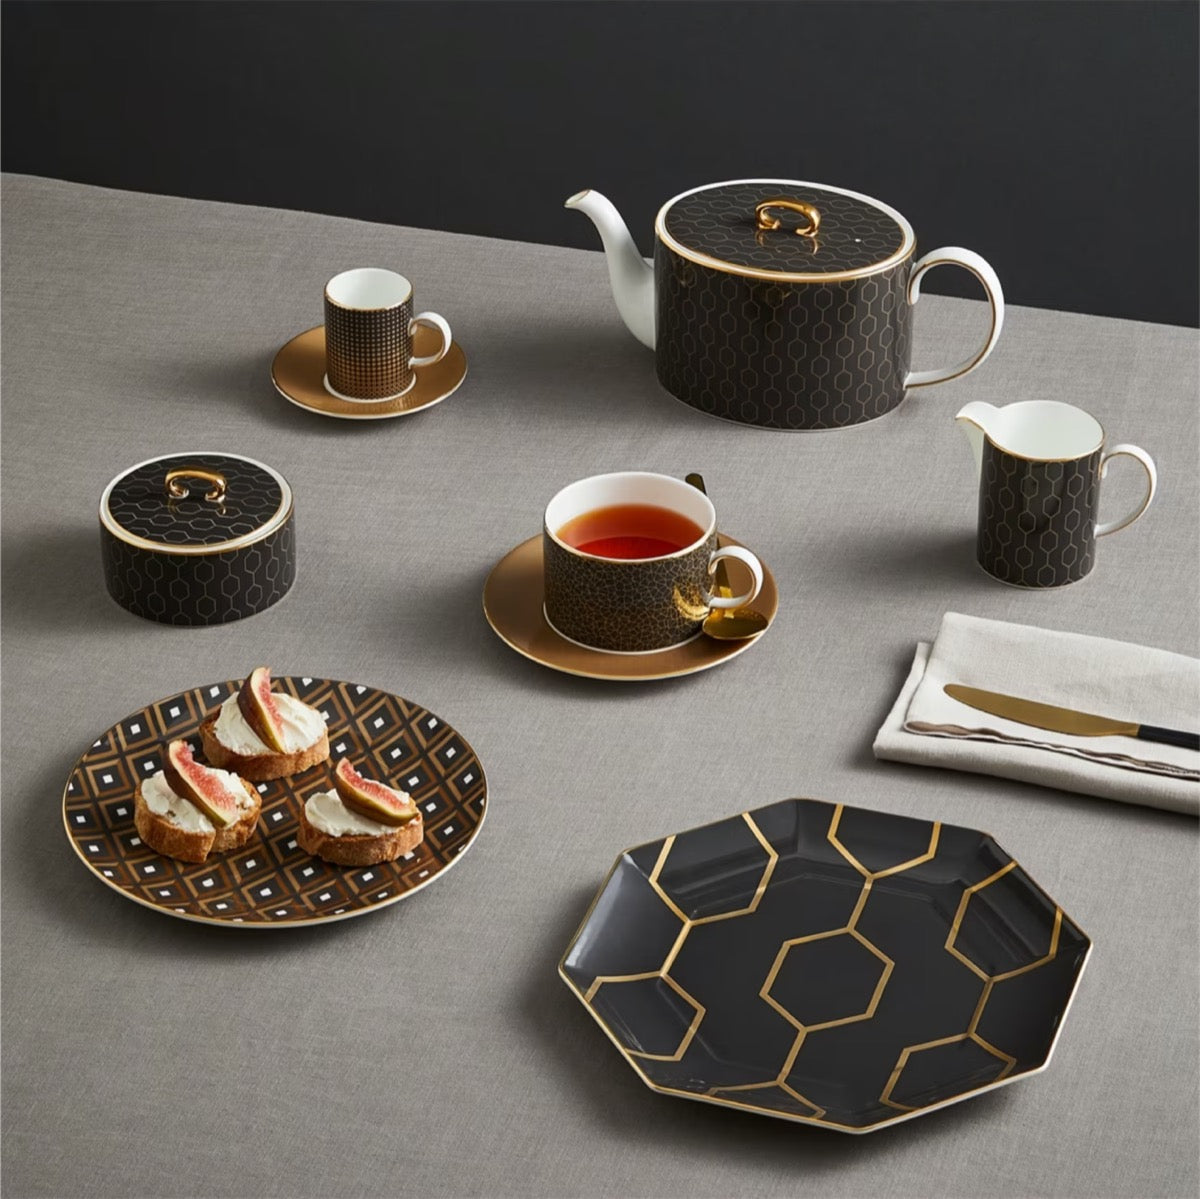 china tea cups and saucers